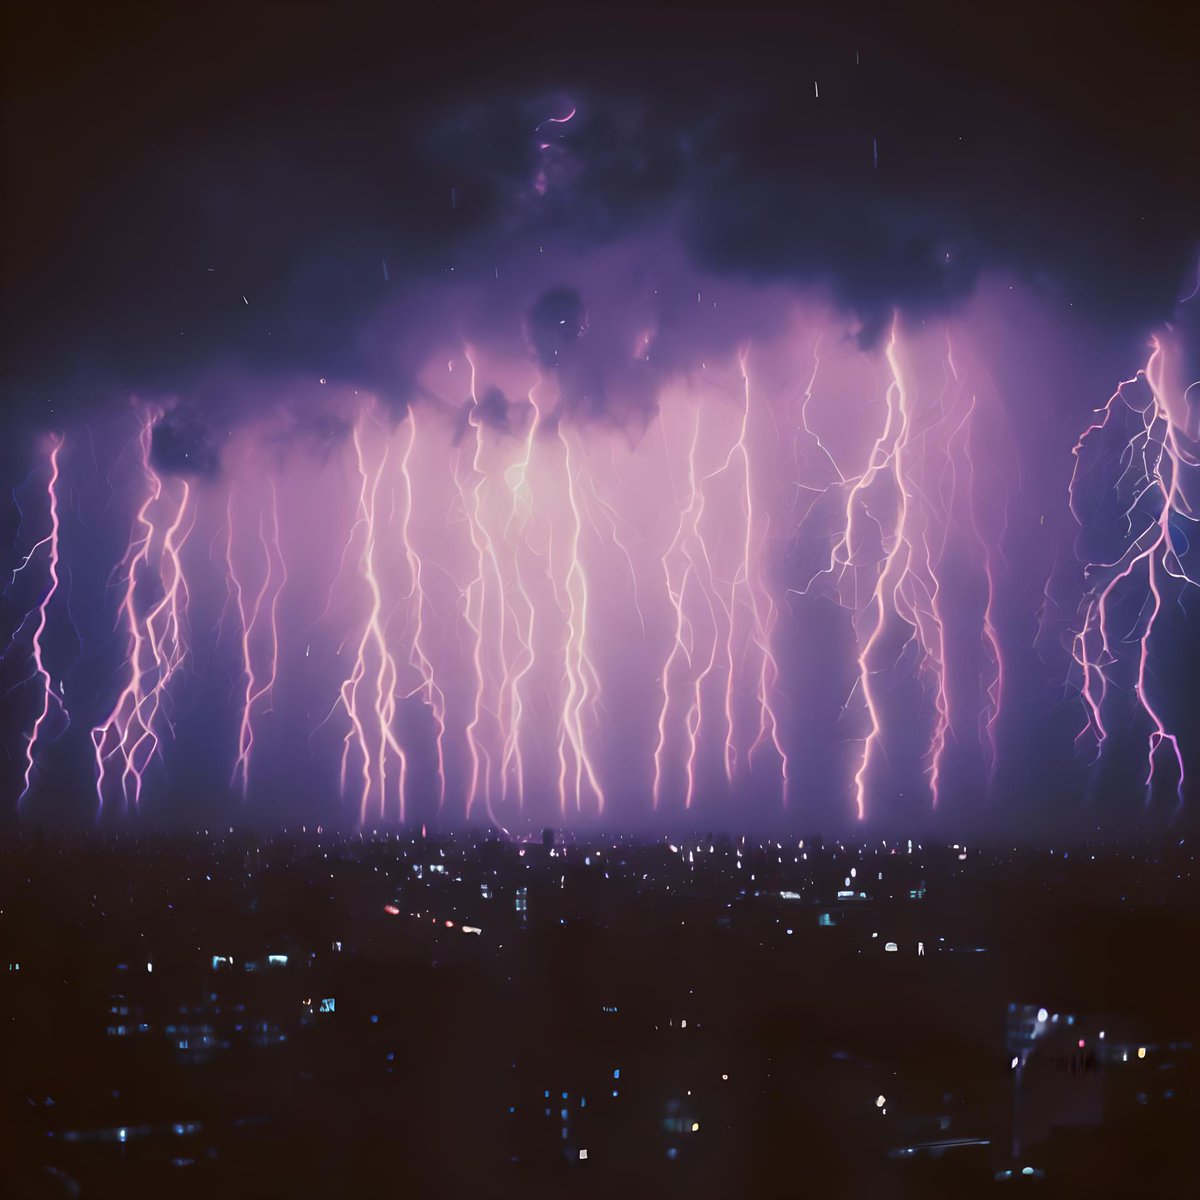 Stormchaser

#digitalart
#dalle2 #midjourney
#photography #photooftheday
#vsco #collage
#urban #urbex #explore
#streetclassics #photoshoot
#streetphotography #rainydays
#storm #bbctravel
#bbcbrasil #cnntravel
#thunder
#thunderstorm #stormchaser

instagram.com/p/Cxq6WxKP-xx